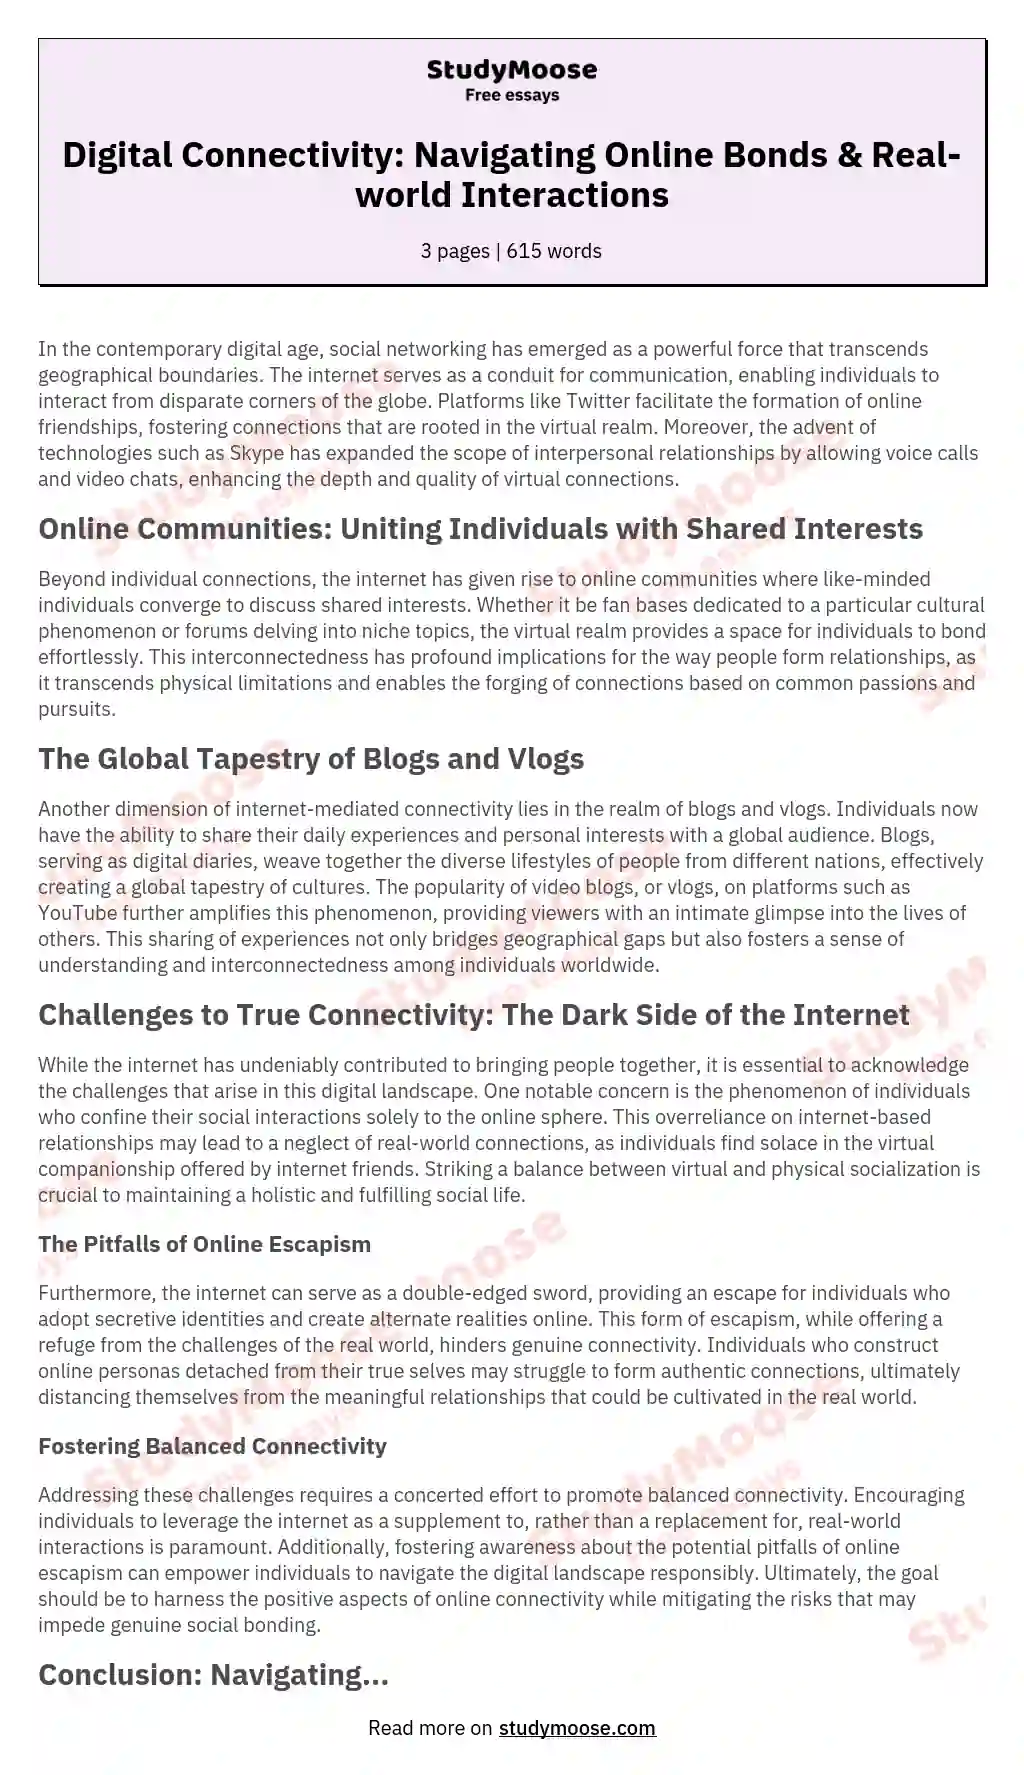 Digital Connectivity: Navigating Online Bonds & Real-world Interactions essay